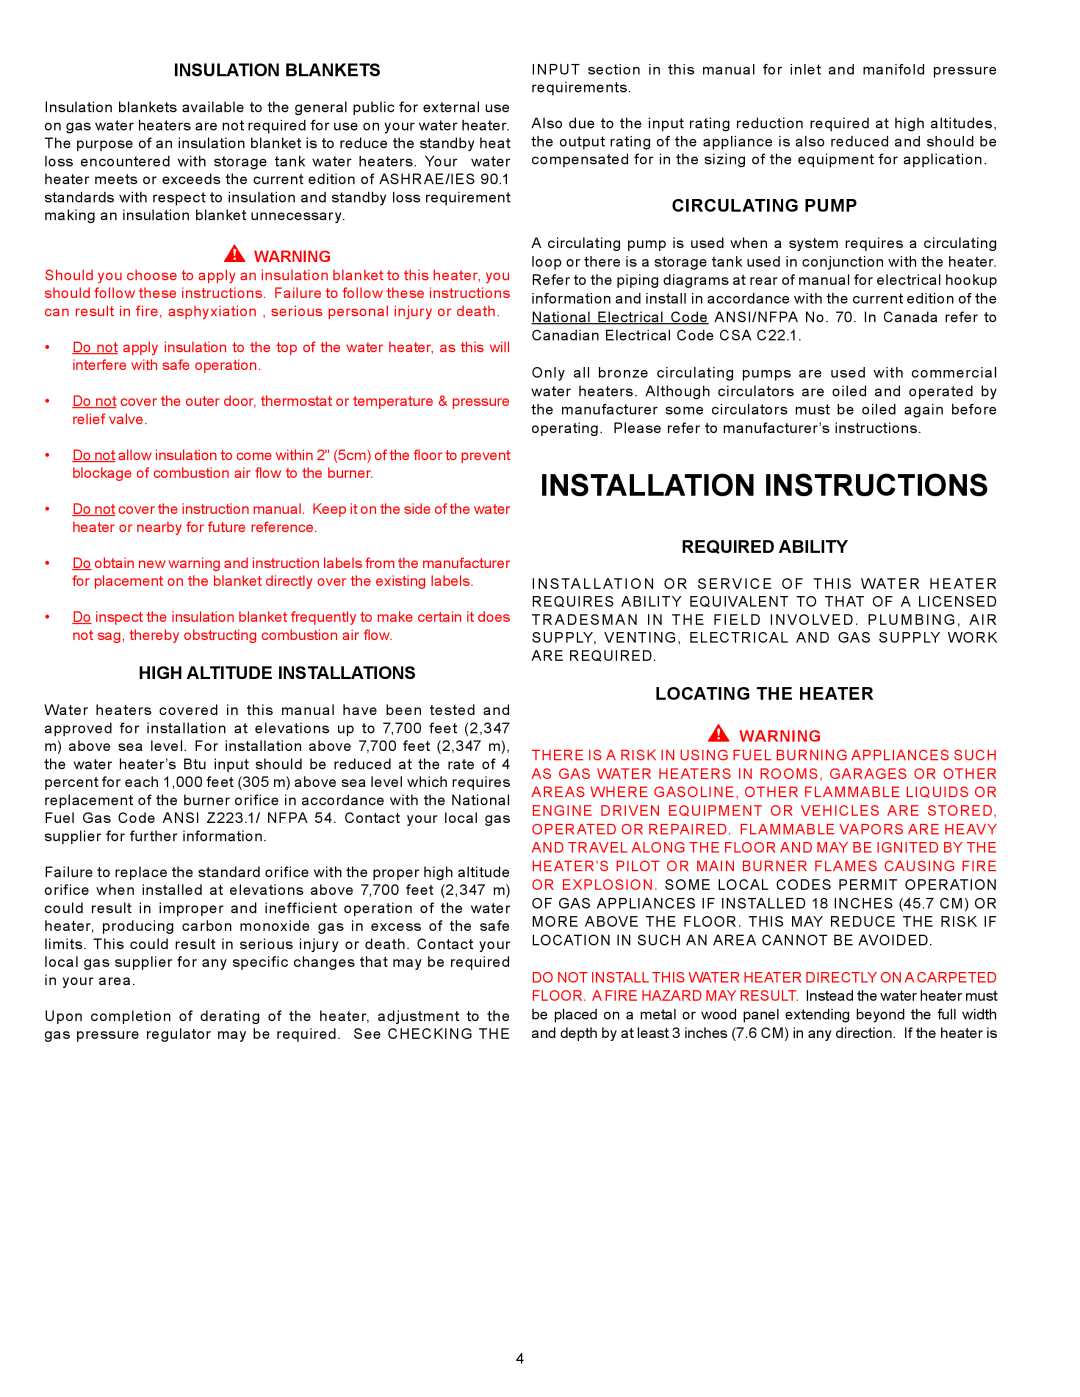 American Water Heater BBCN375T754NV warranty Installation Instructions, Insulation Blankets, High Altitude Installations 